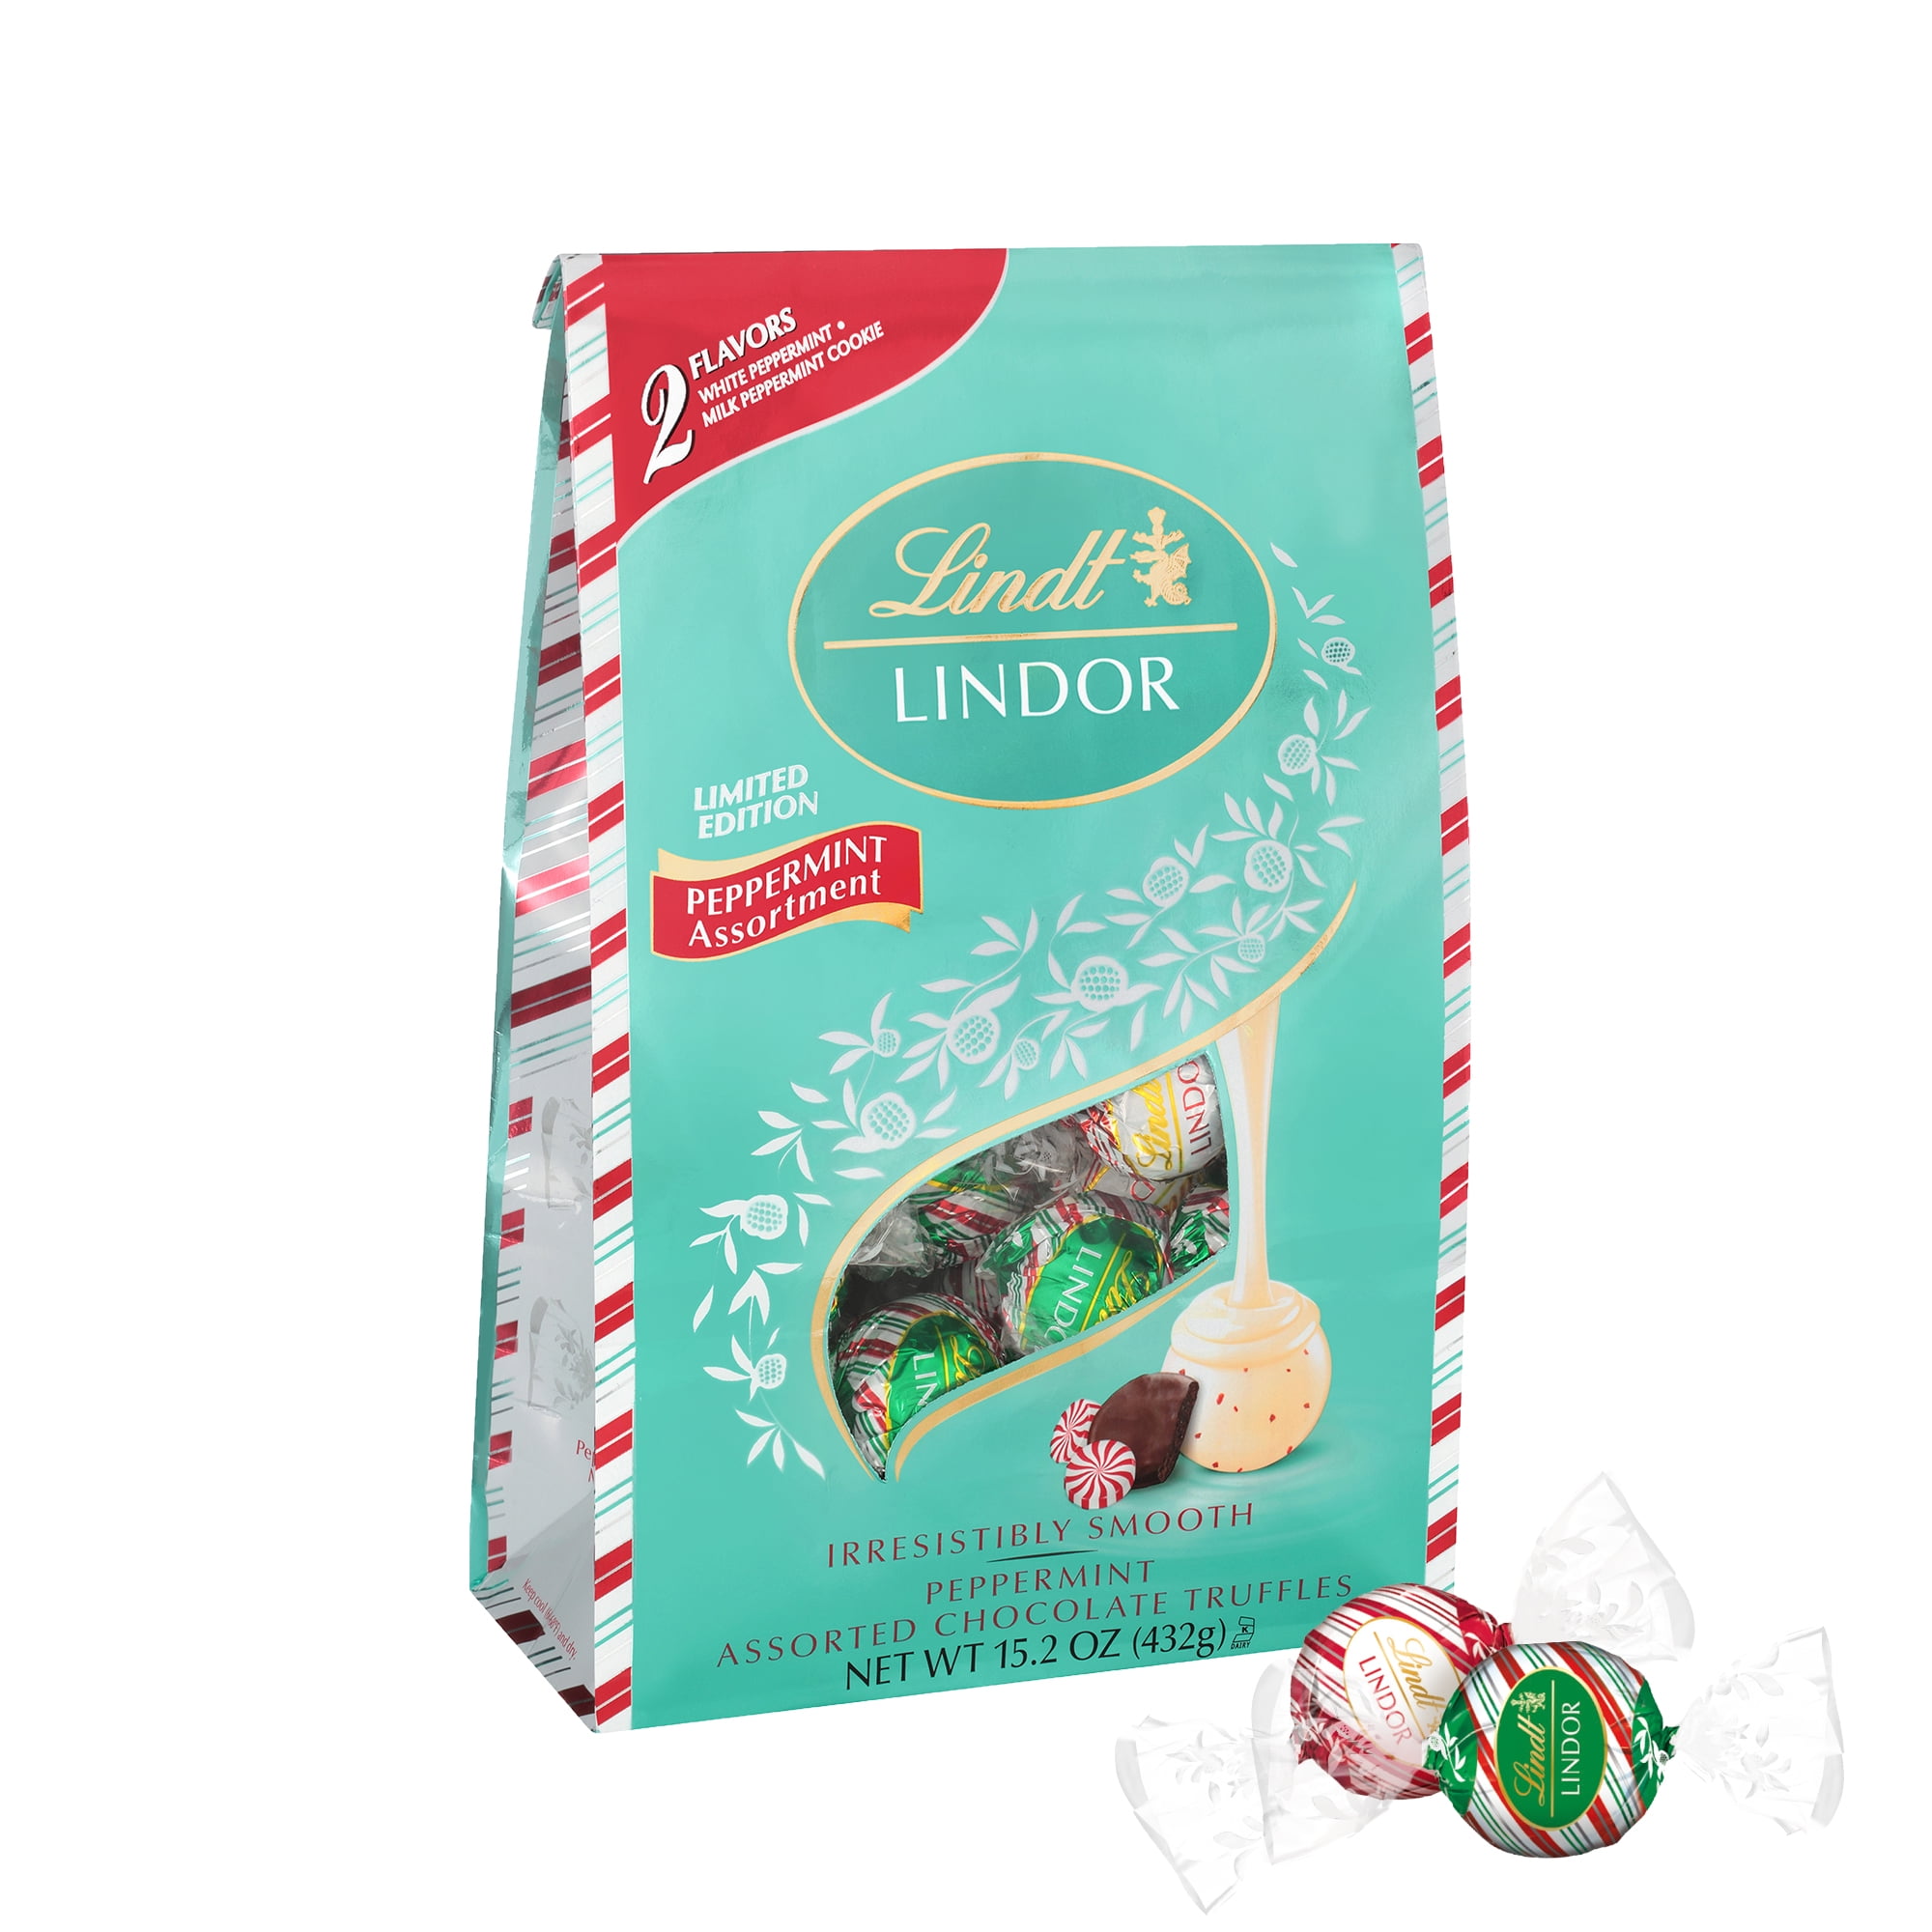 M&M'S Holiday Peanut Milk Chocolate Christmas Candy Gift Box, 3.1 oz -  Ralphs